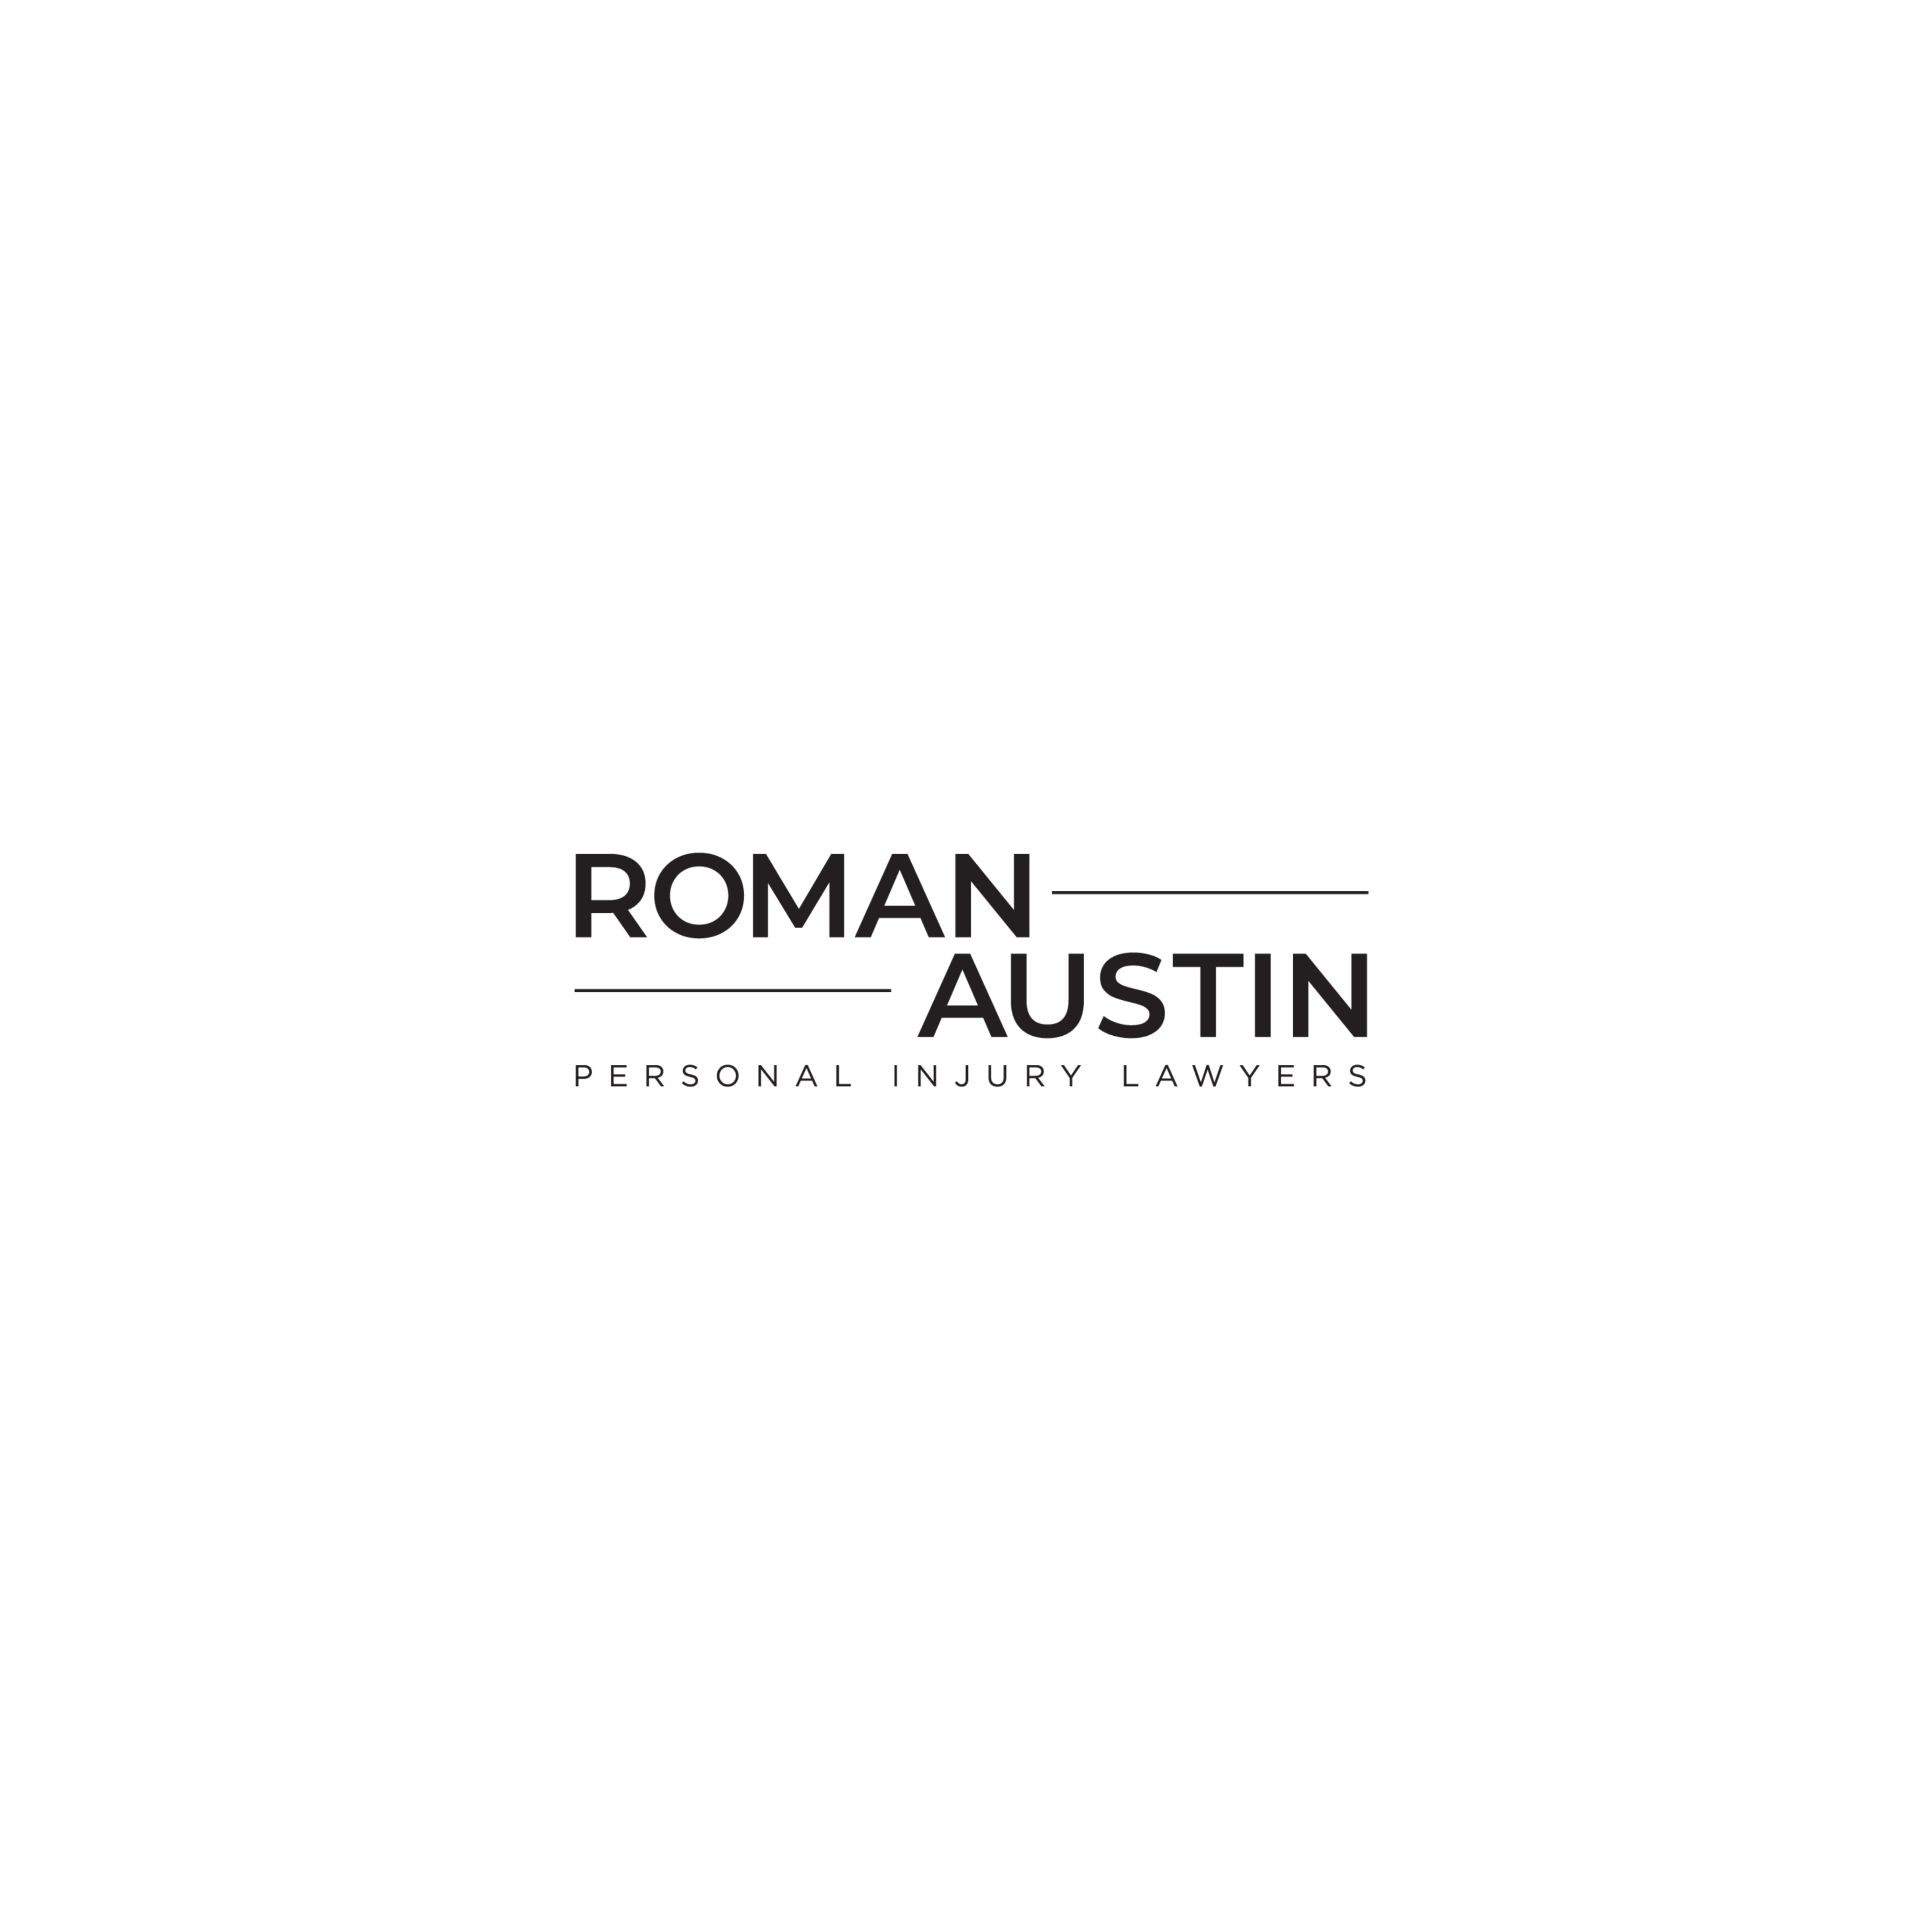 Roman Austin Personal Injury Lawyers - New Port Richey Office